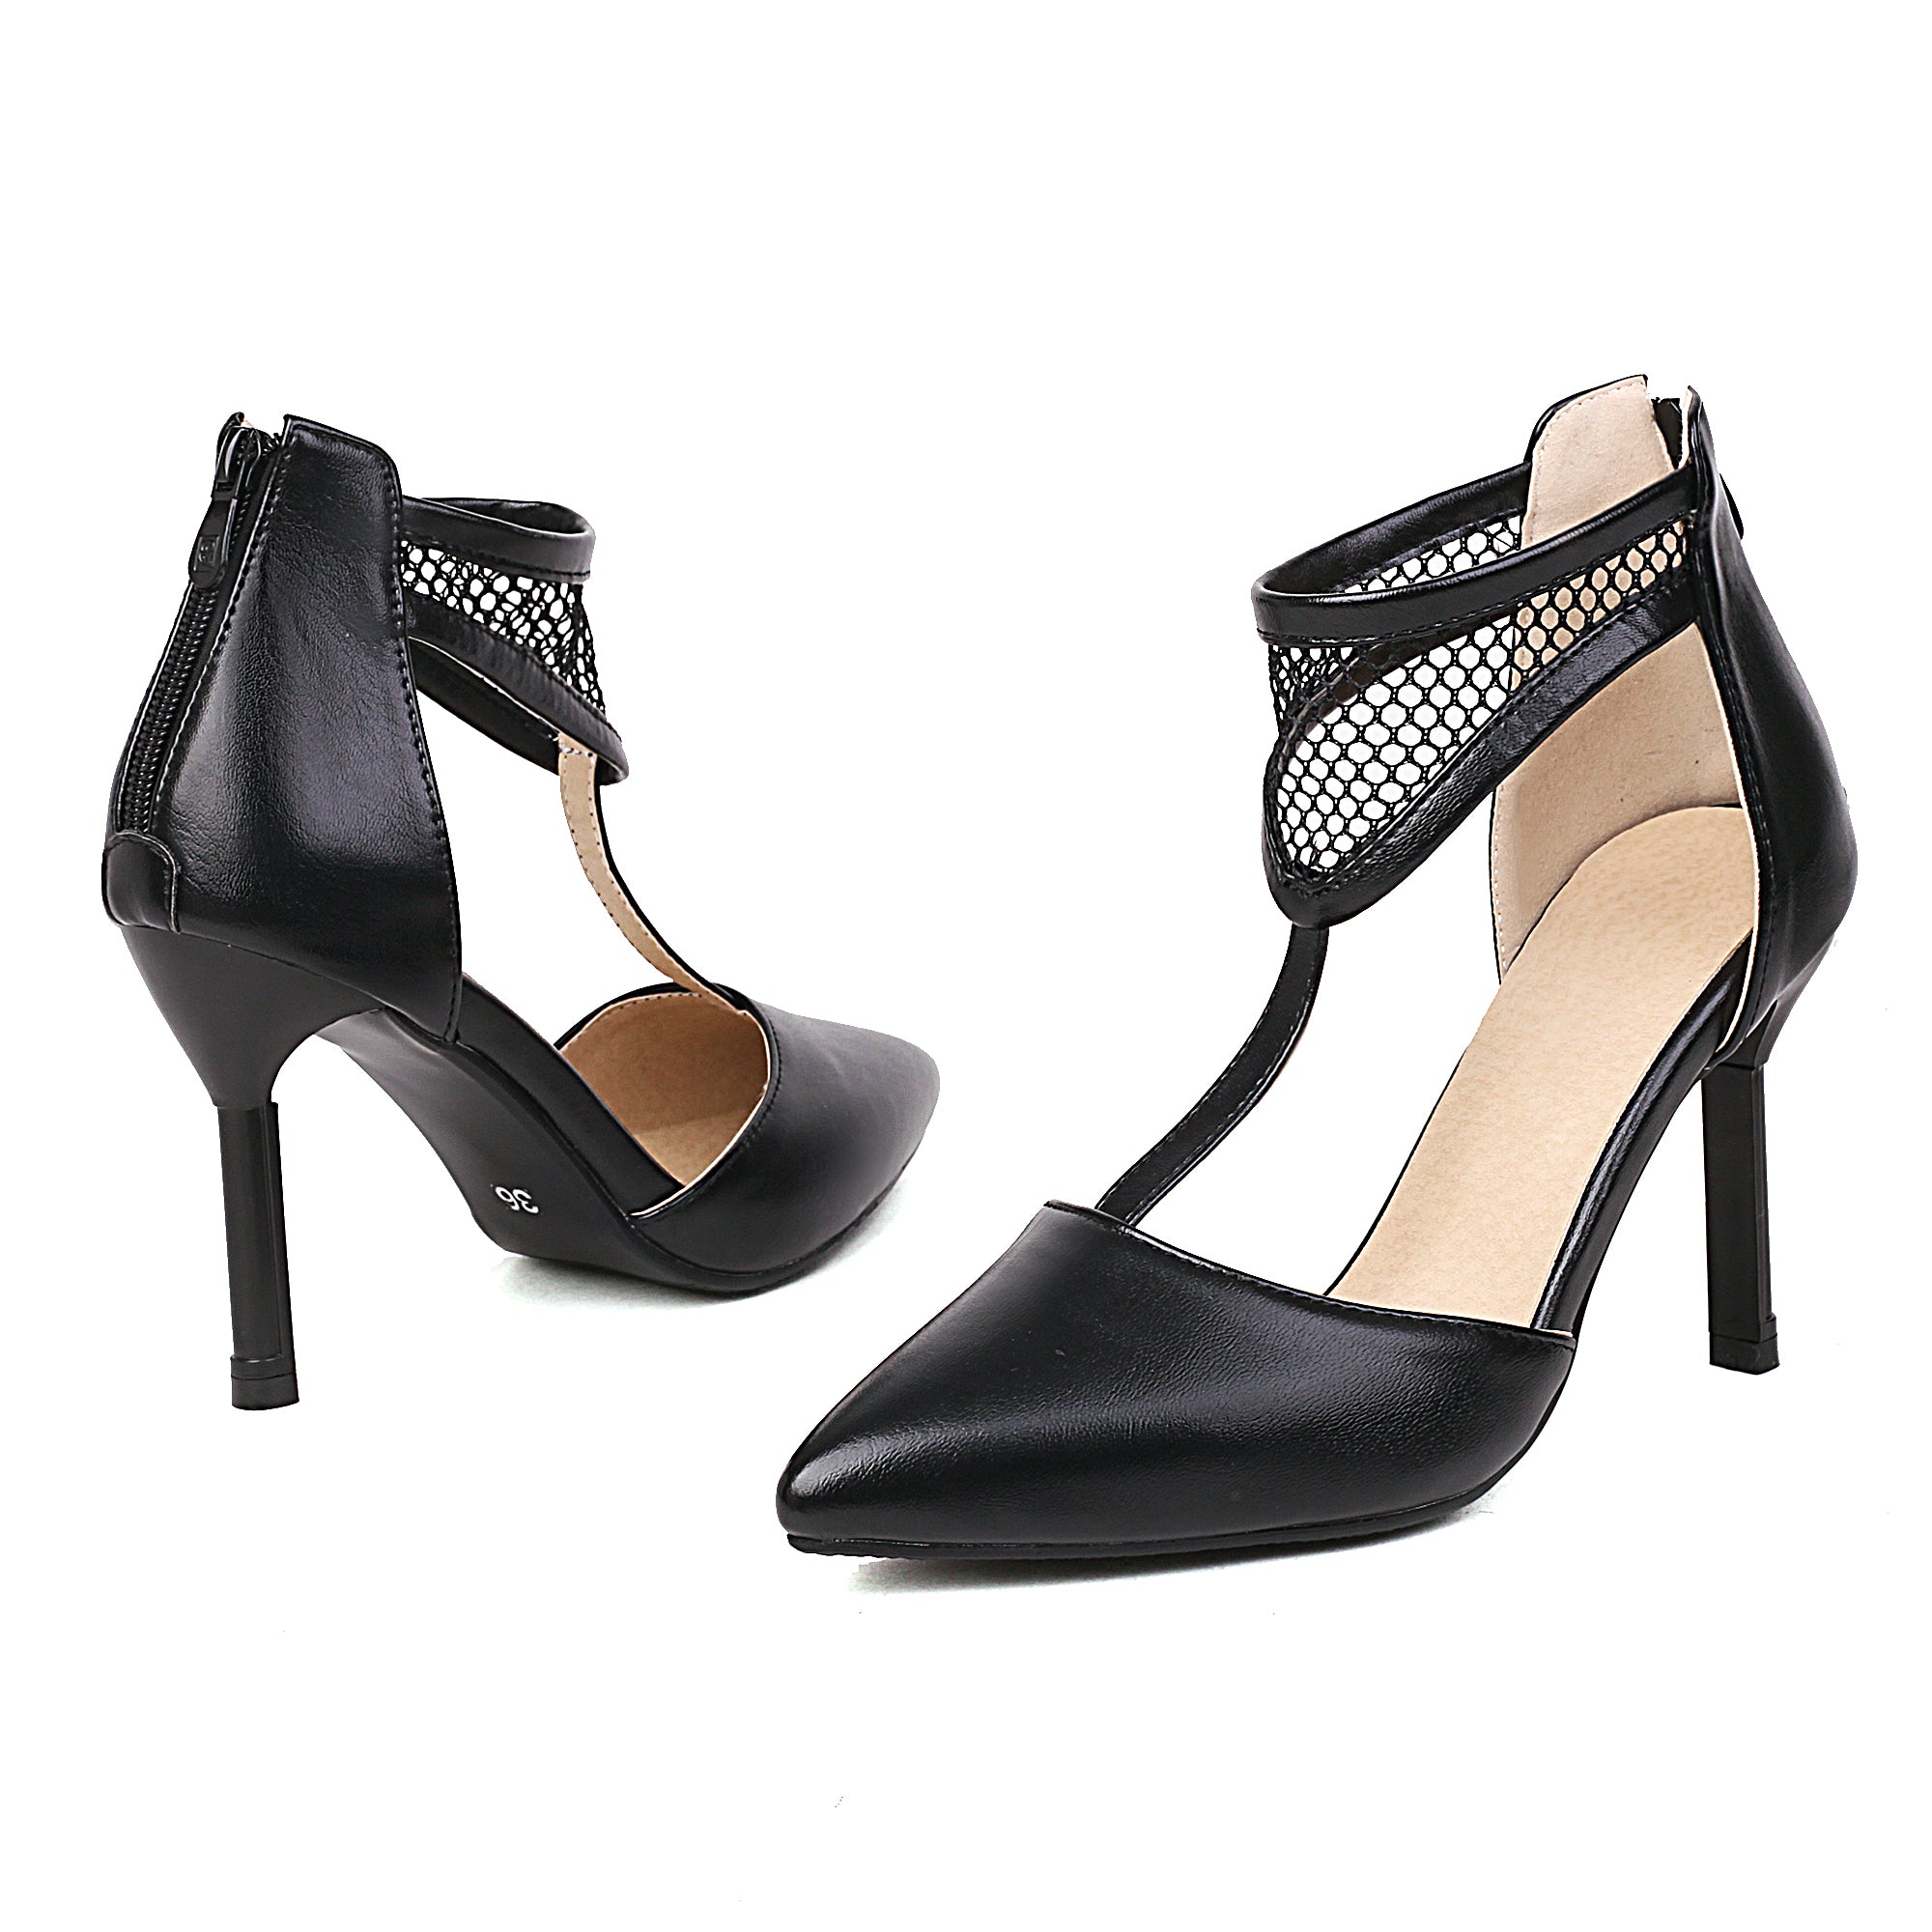 Bigsizeheels Cutout Mesh Ankle Strap High Heel Sandals - Black best oversized womens heels from bigsizeheel®